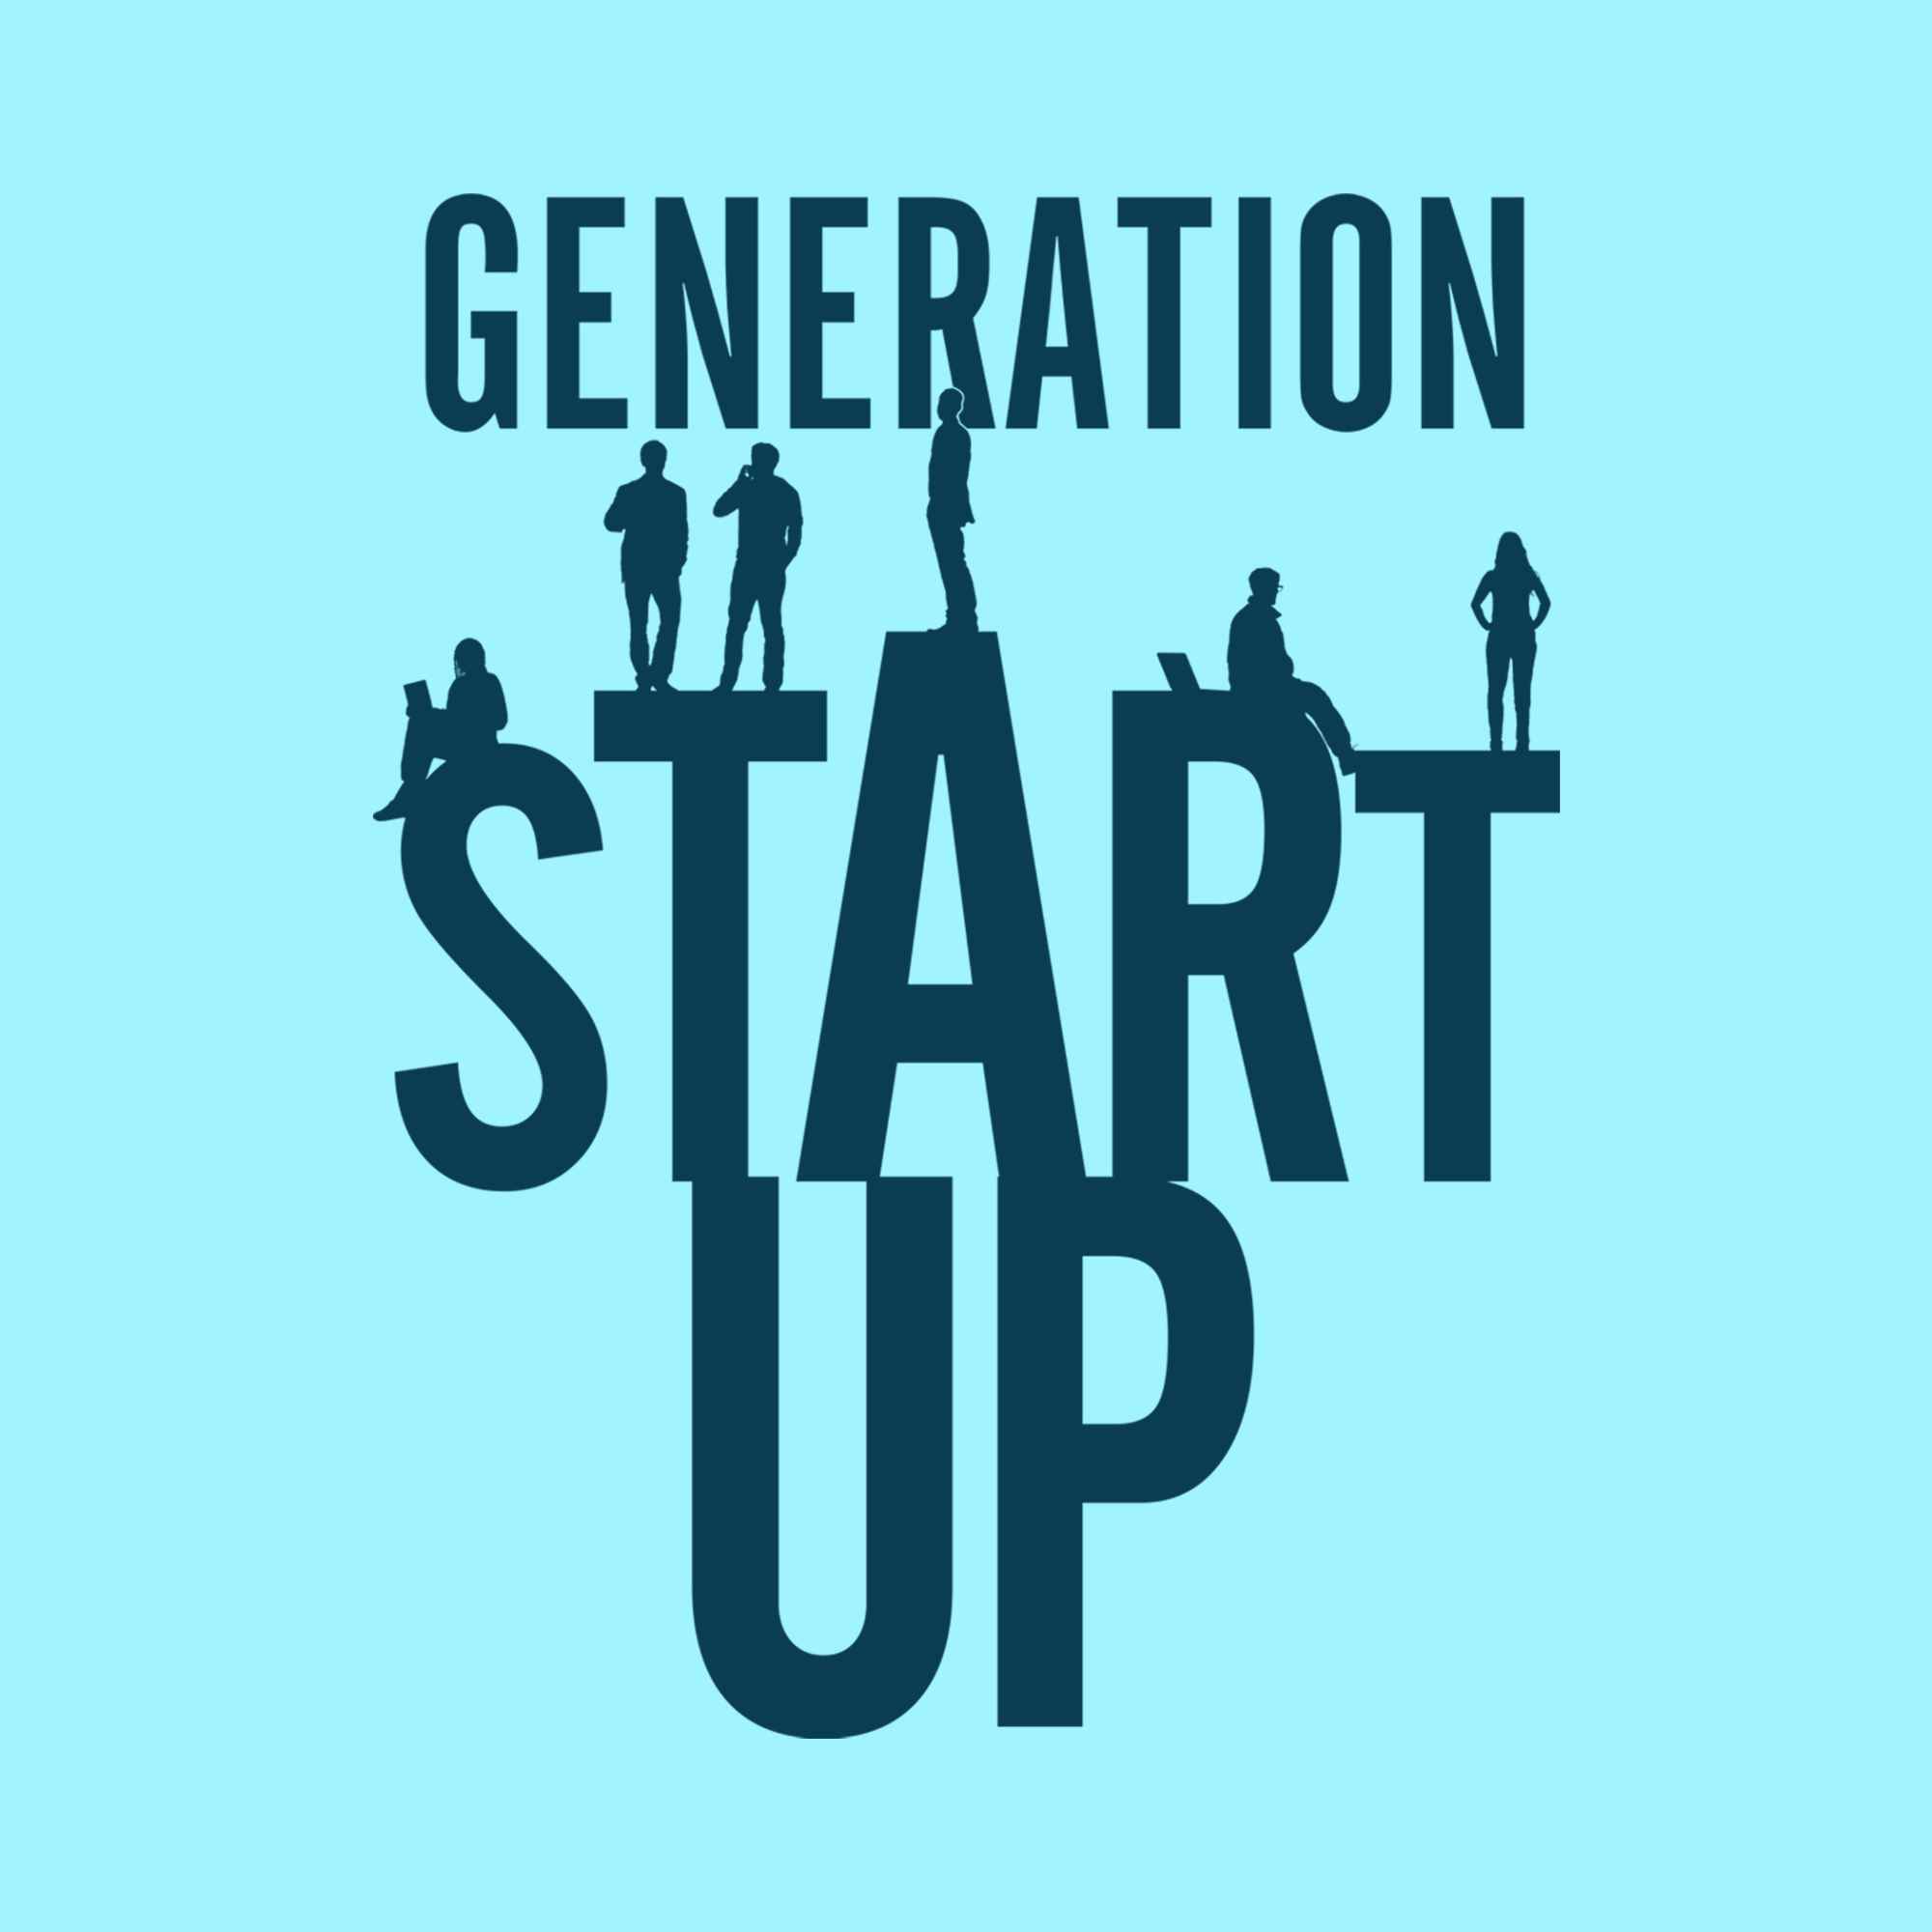 Generation Startup - the Movie